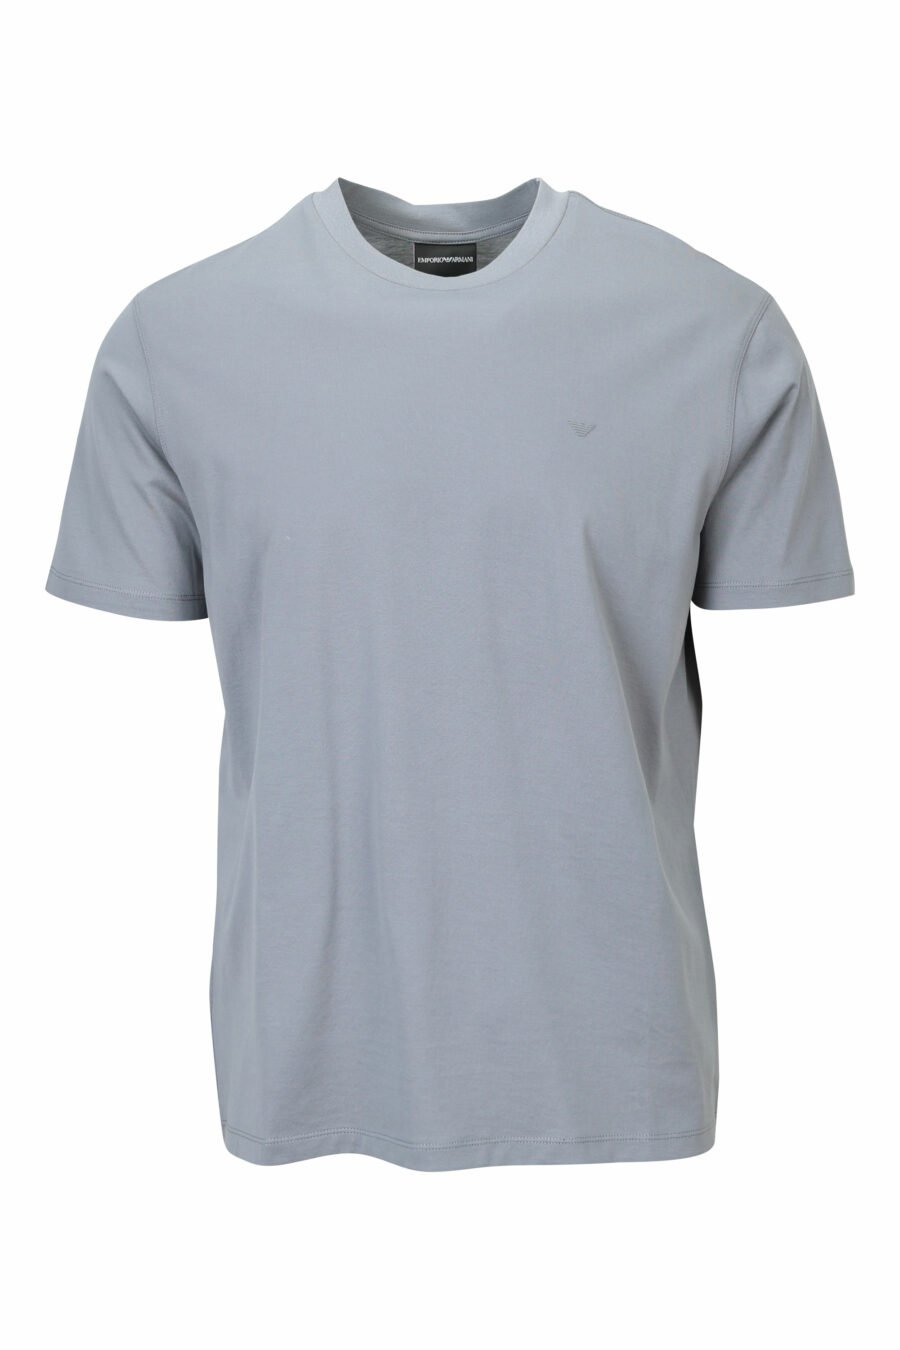 Camiseta gris con minilogo águila - 8058997158268